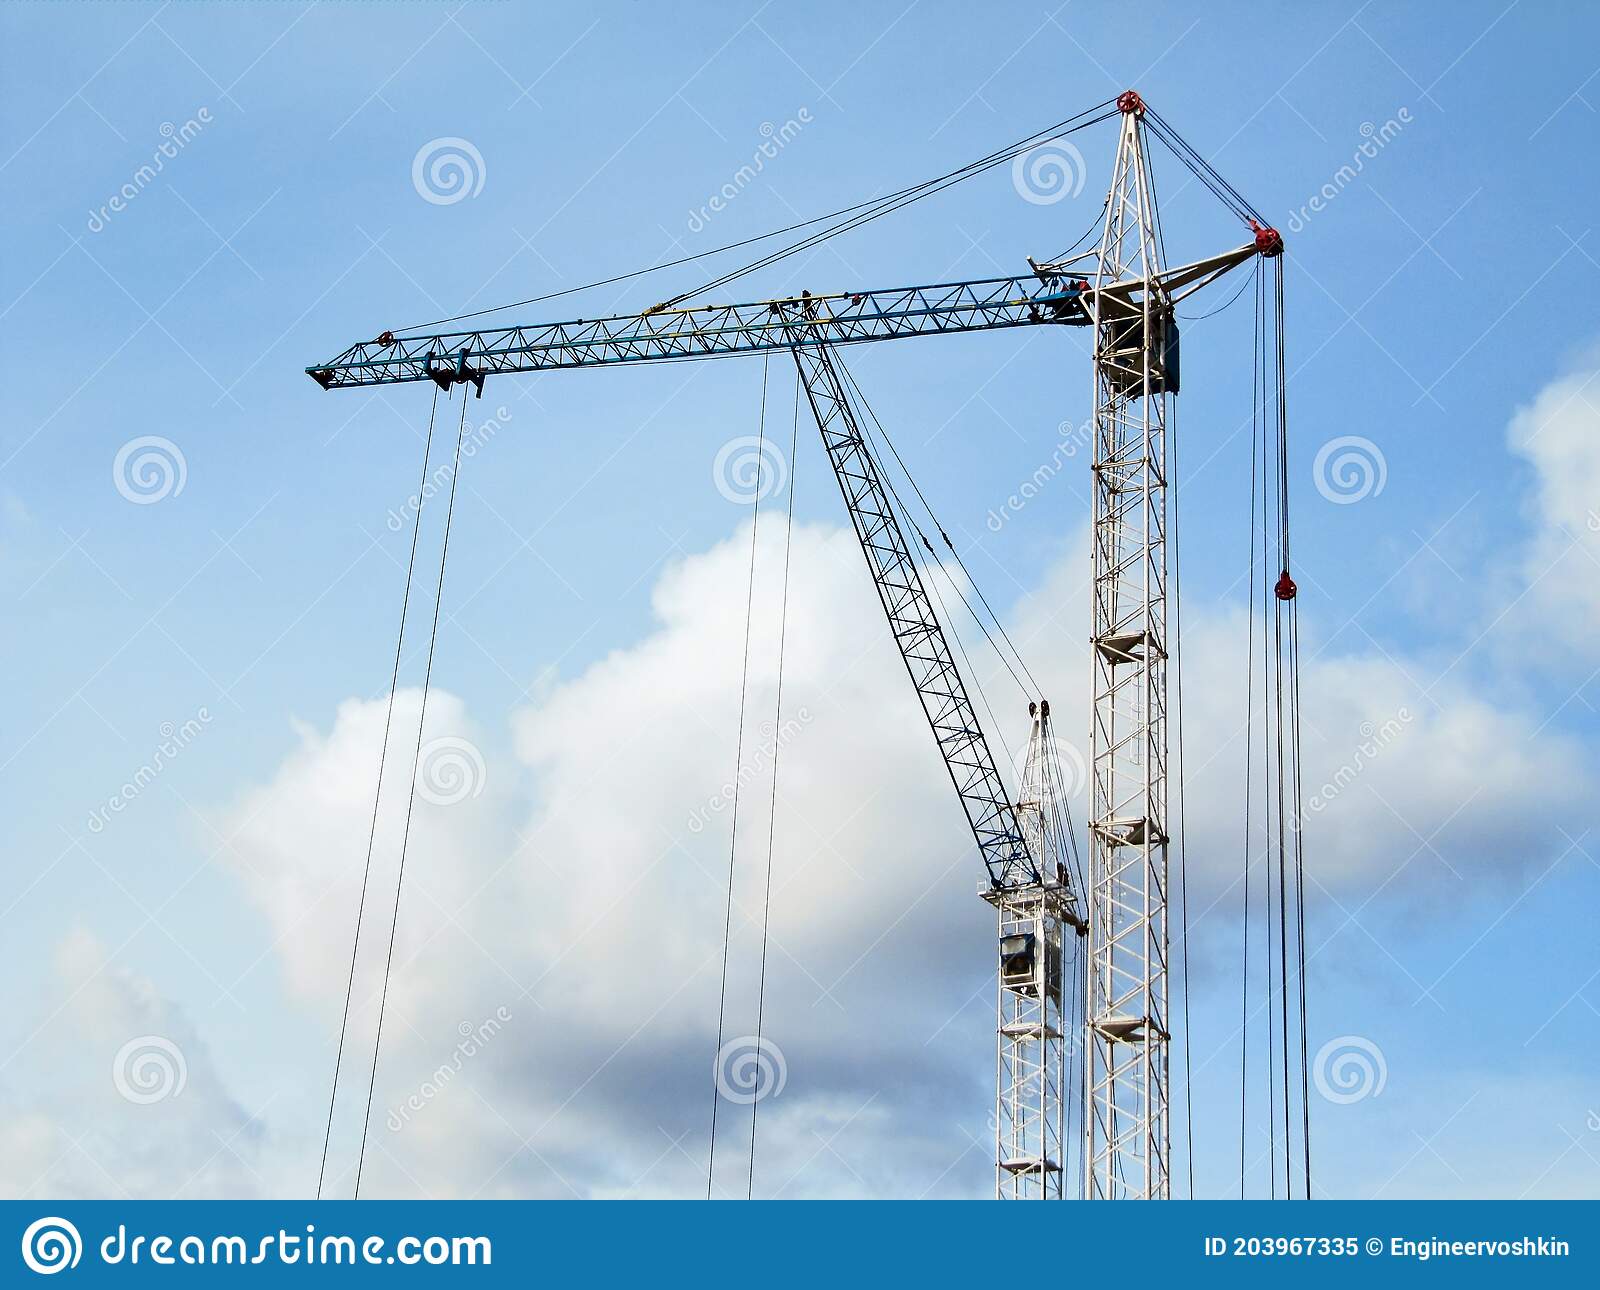 cranes in the sky download